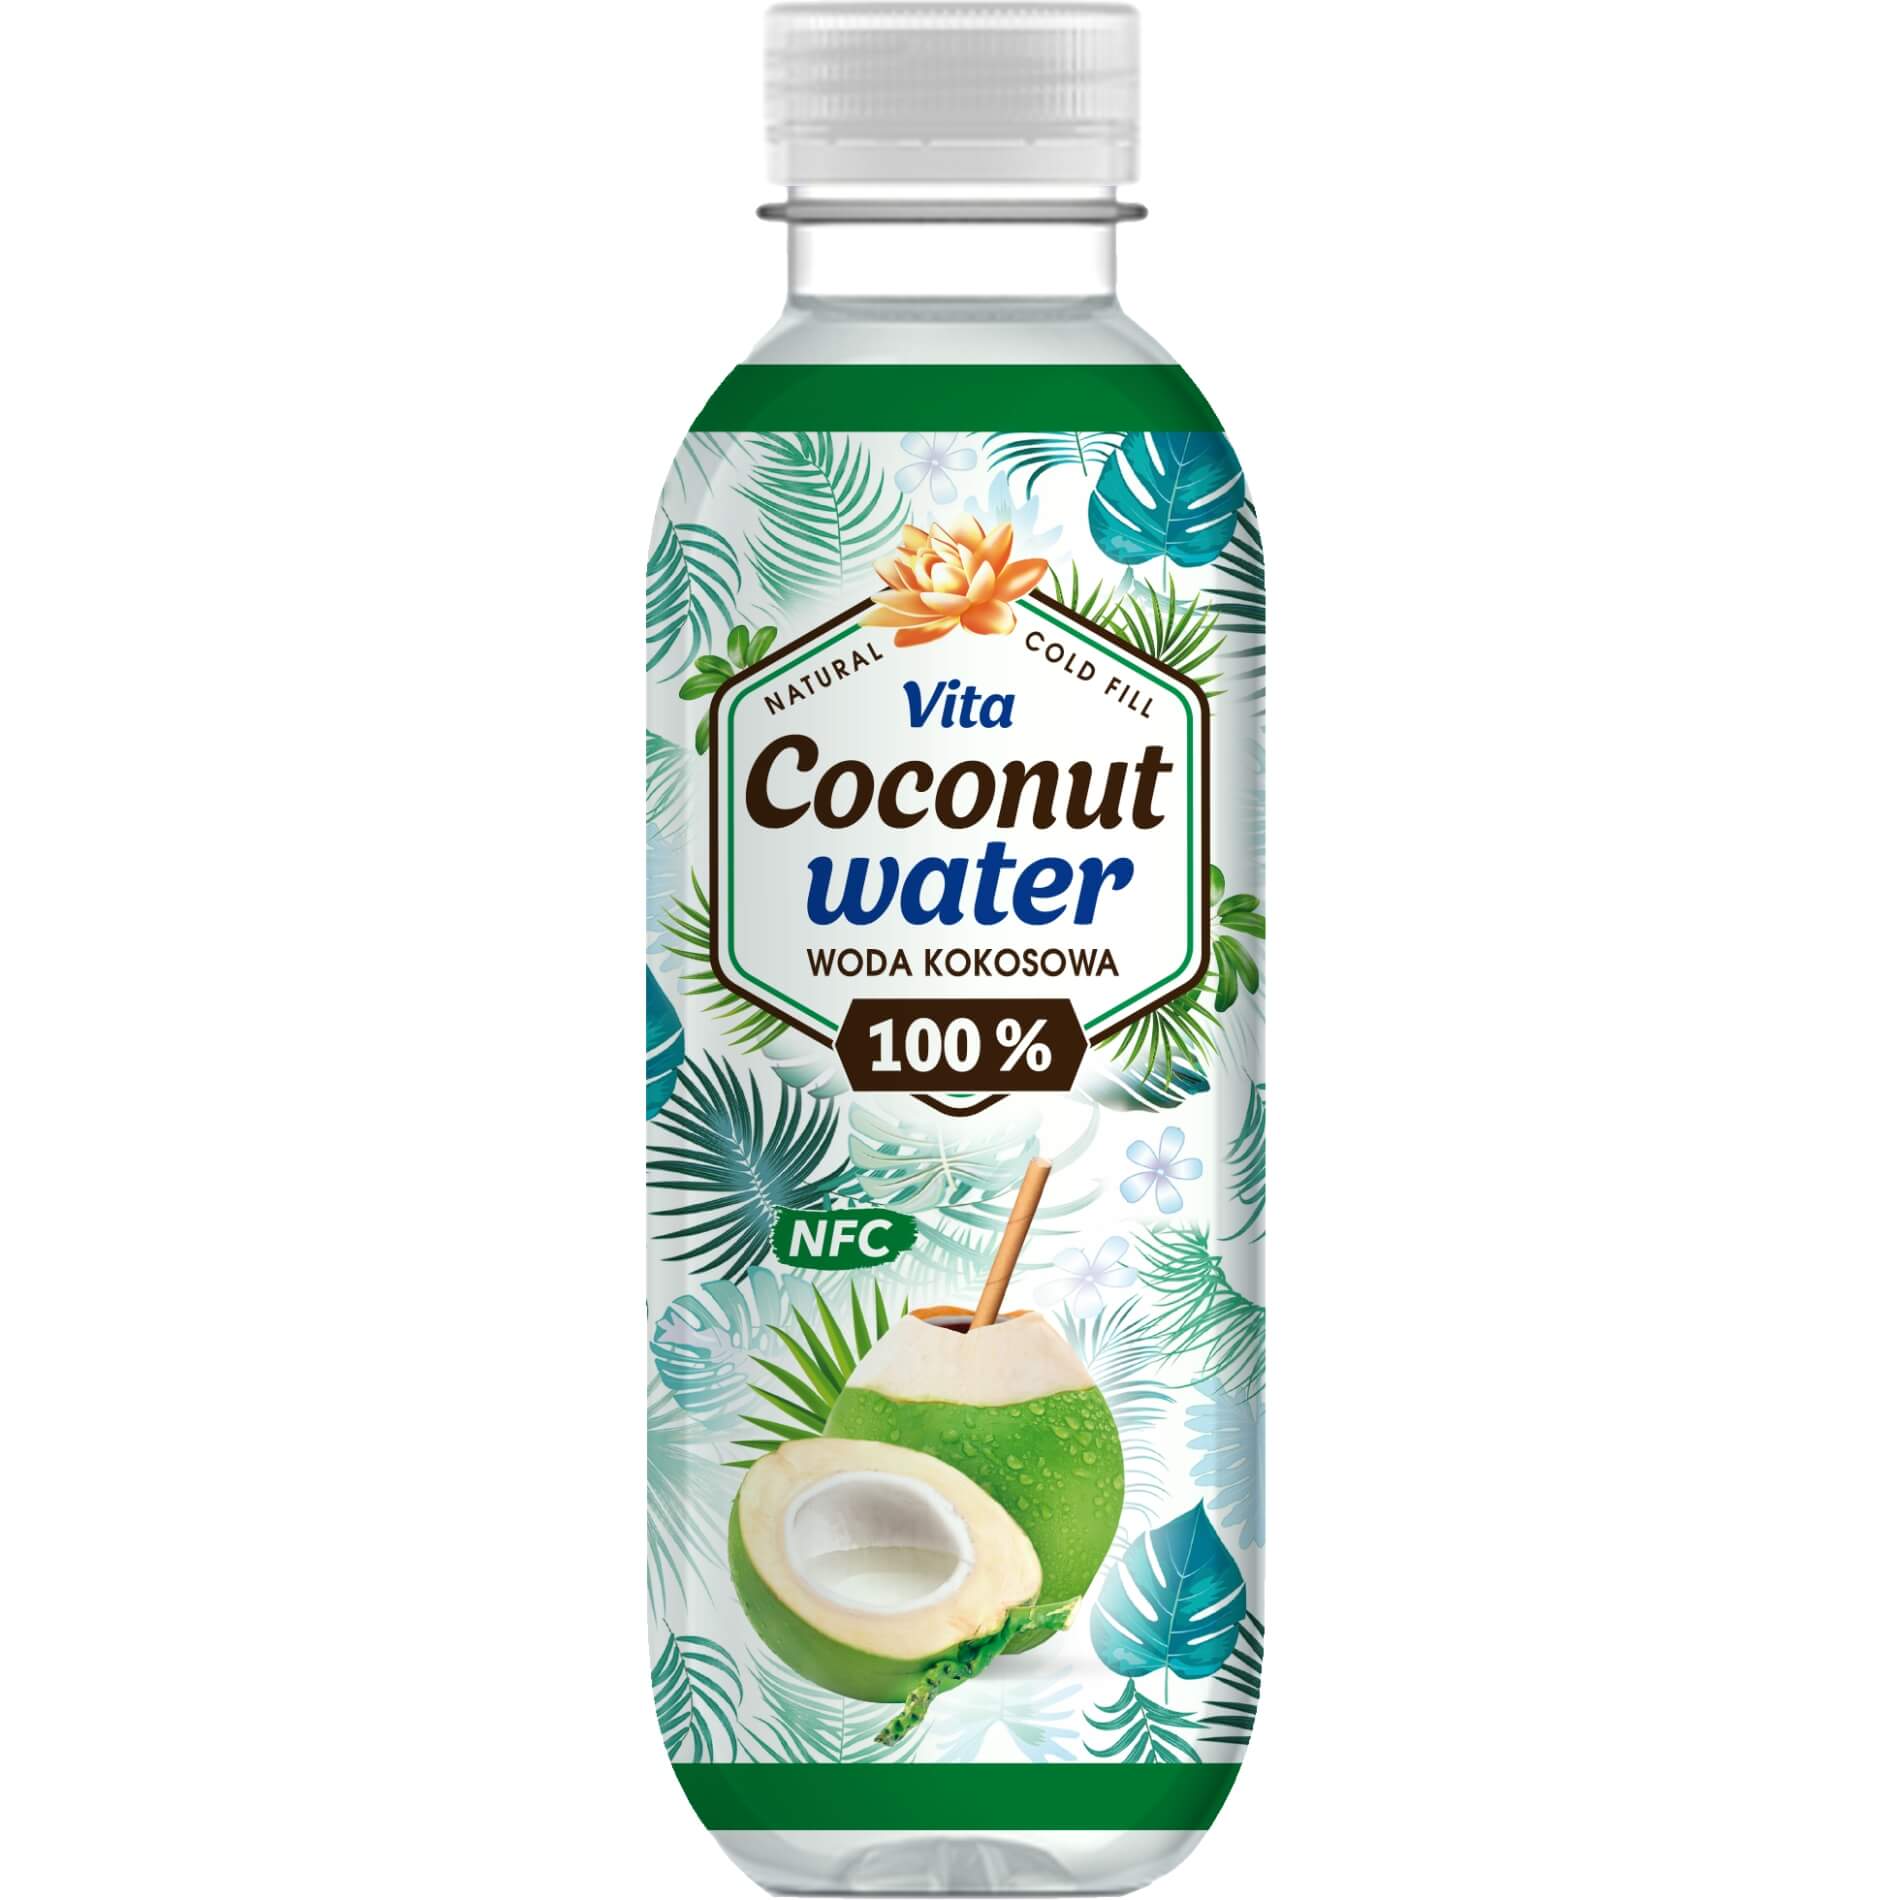 woda kokosowa vita